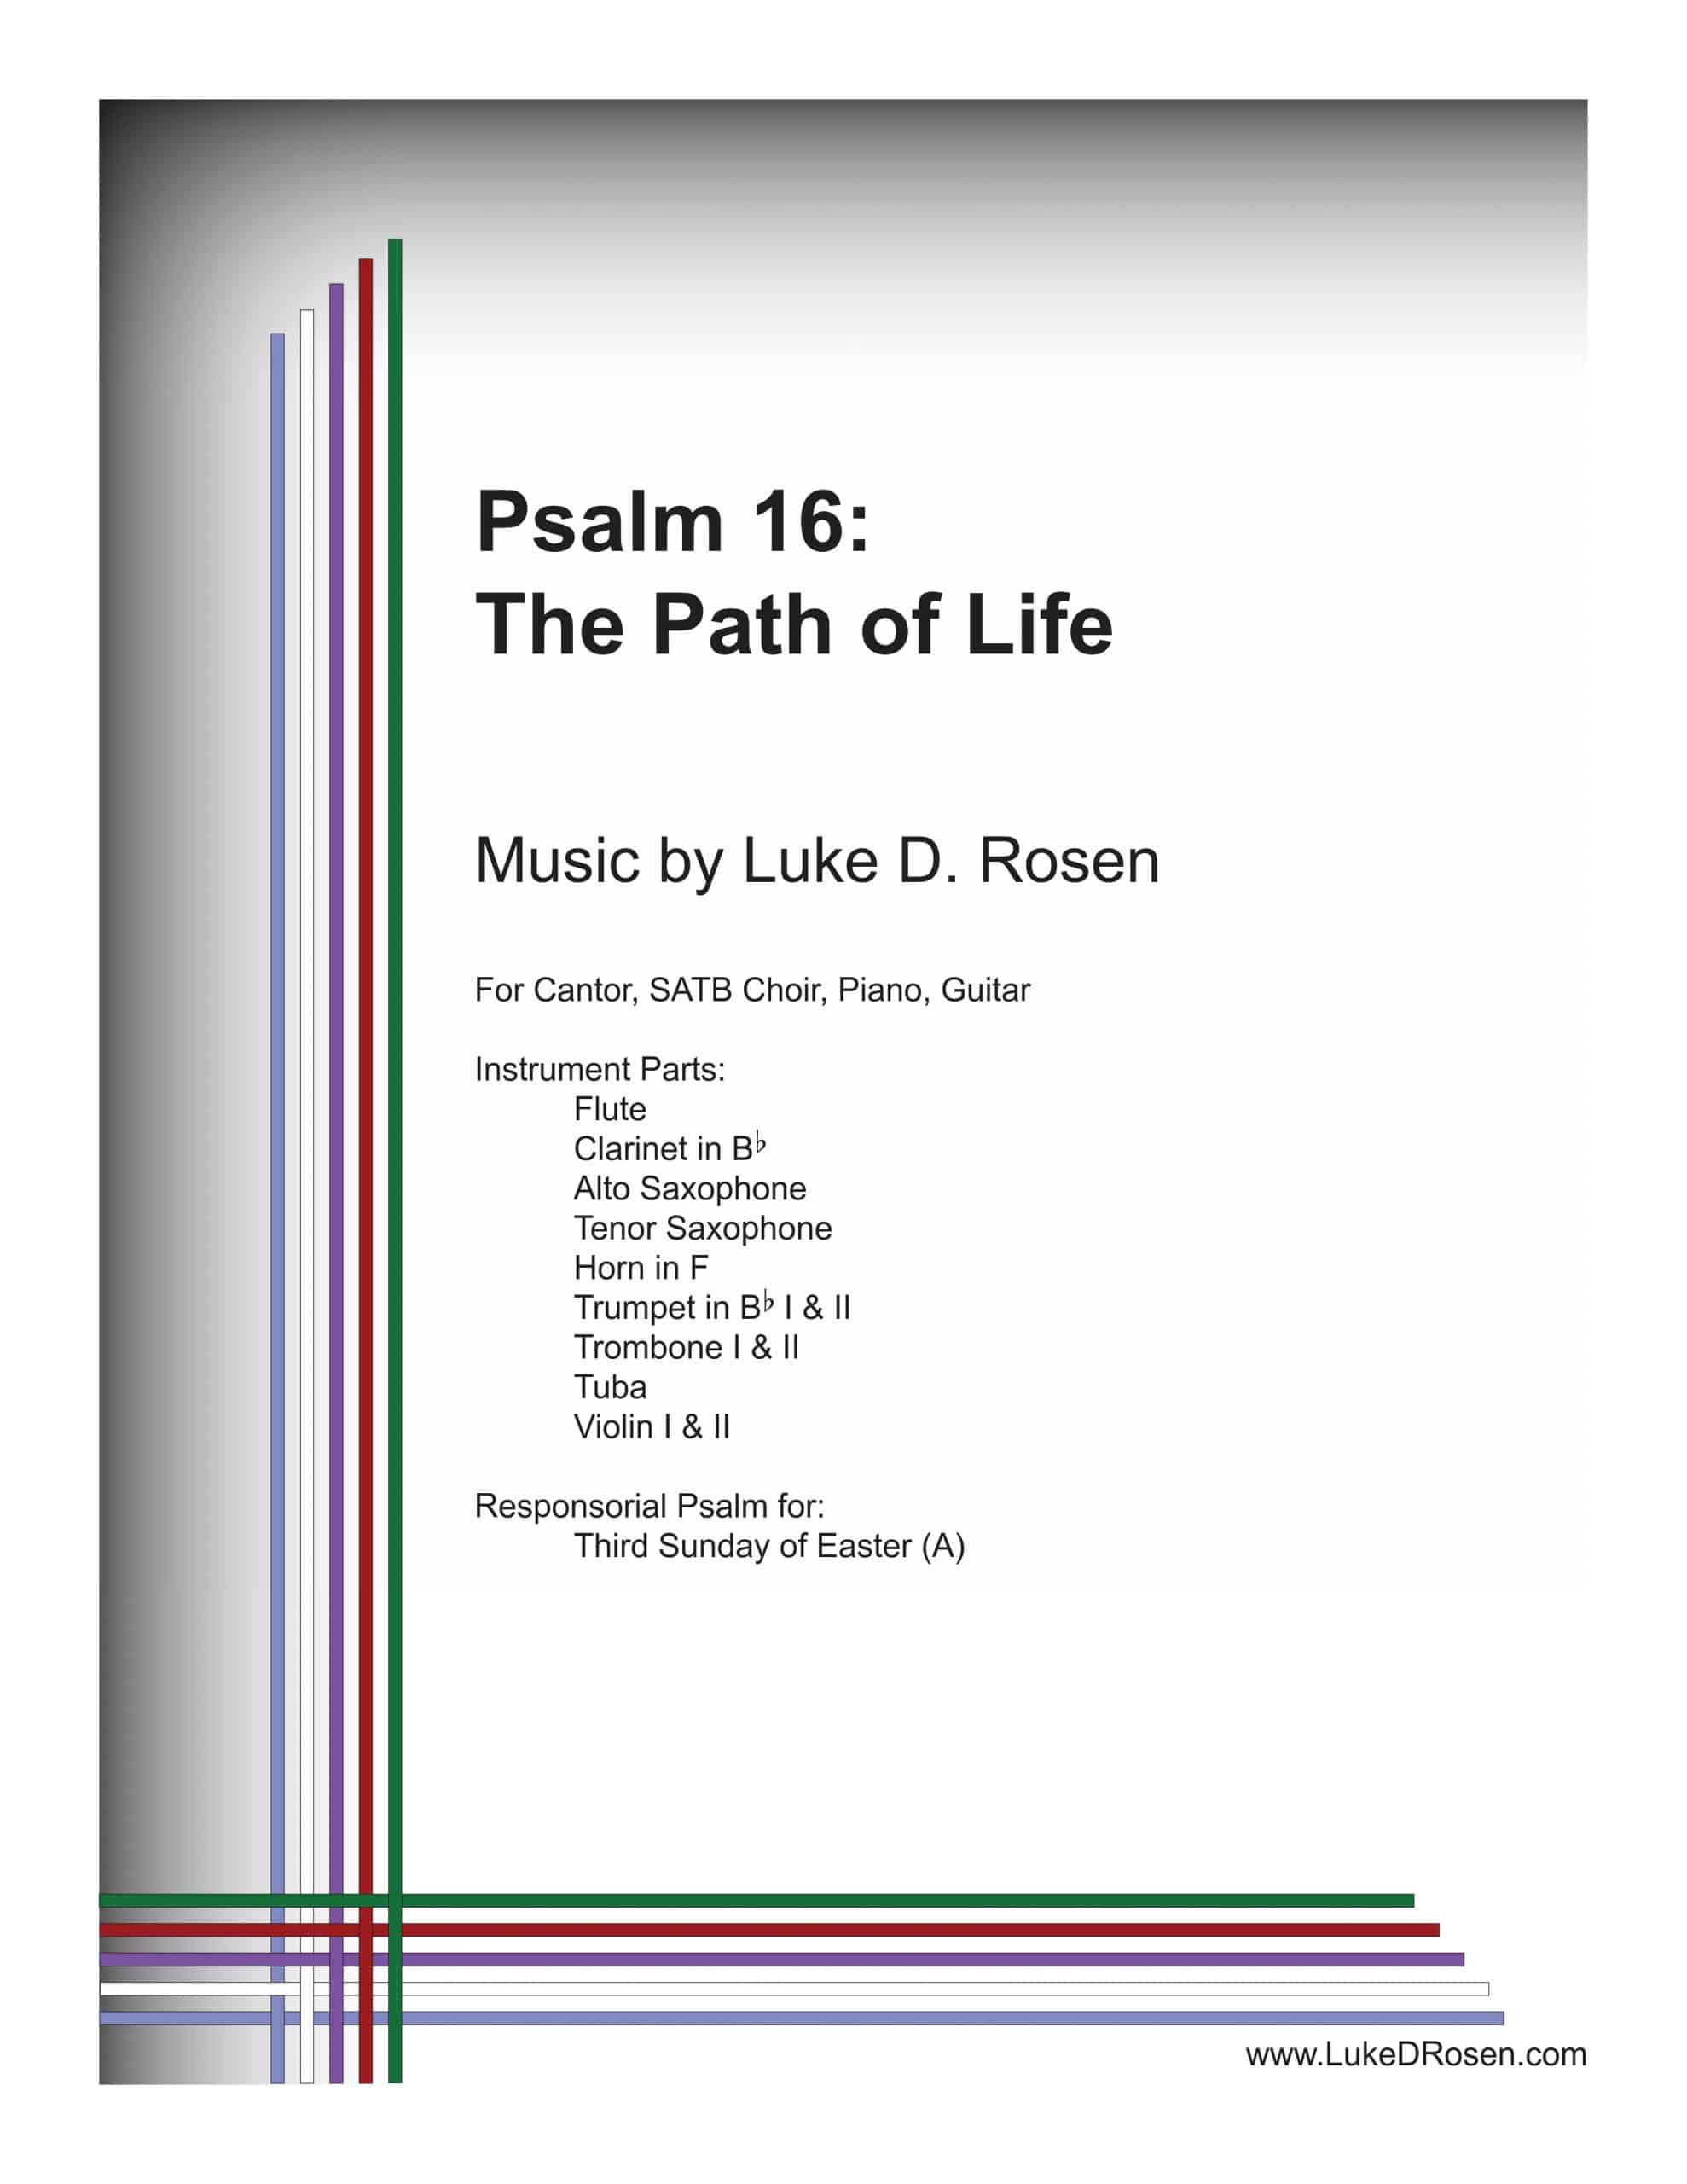 Psalm 16 – The Path of Life (Rosen)